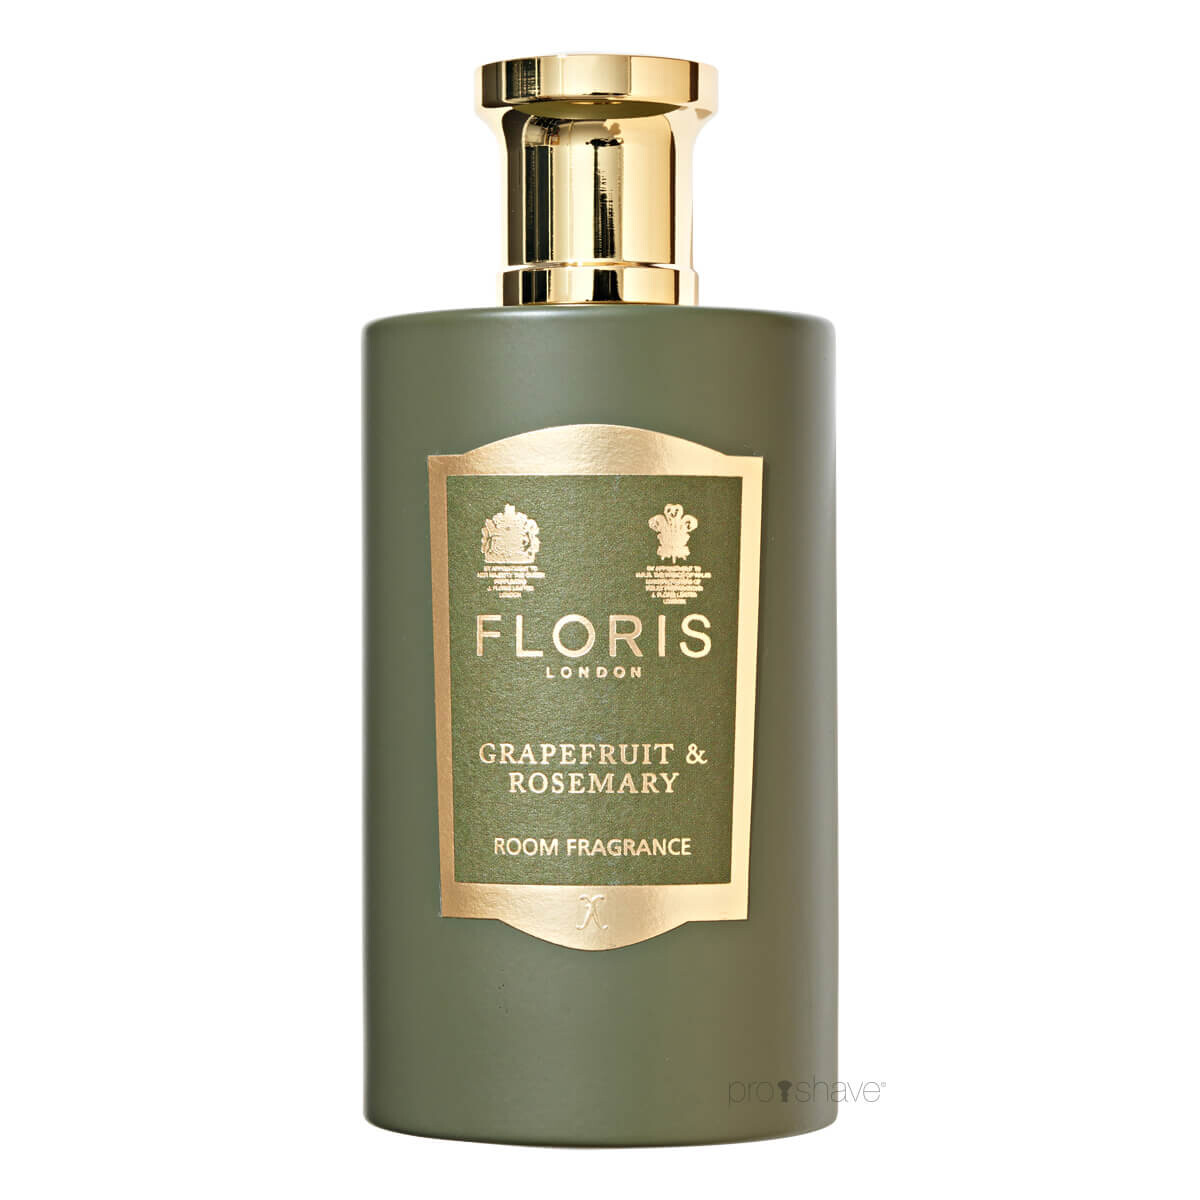 5: Floris Grapefrugt & Rosmarin Room Fragrance, 100 ml.